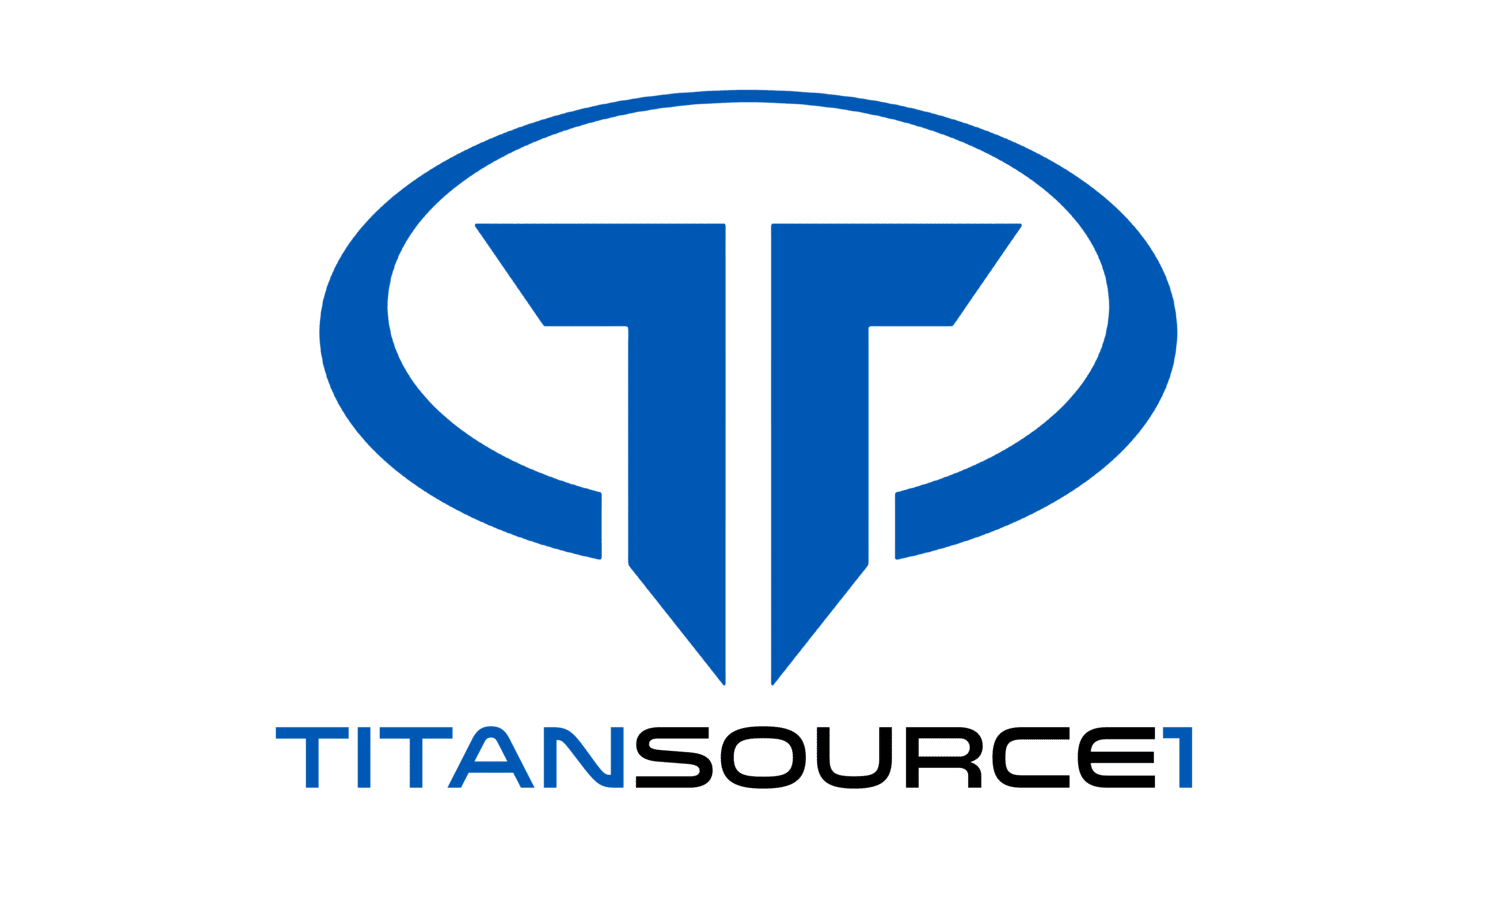 Titan Source 1